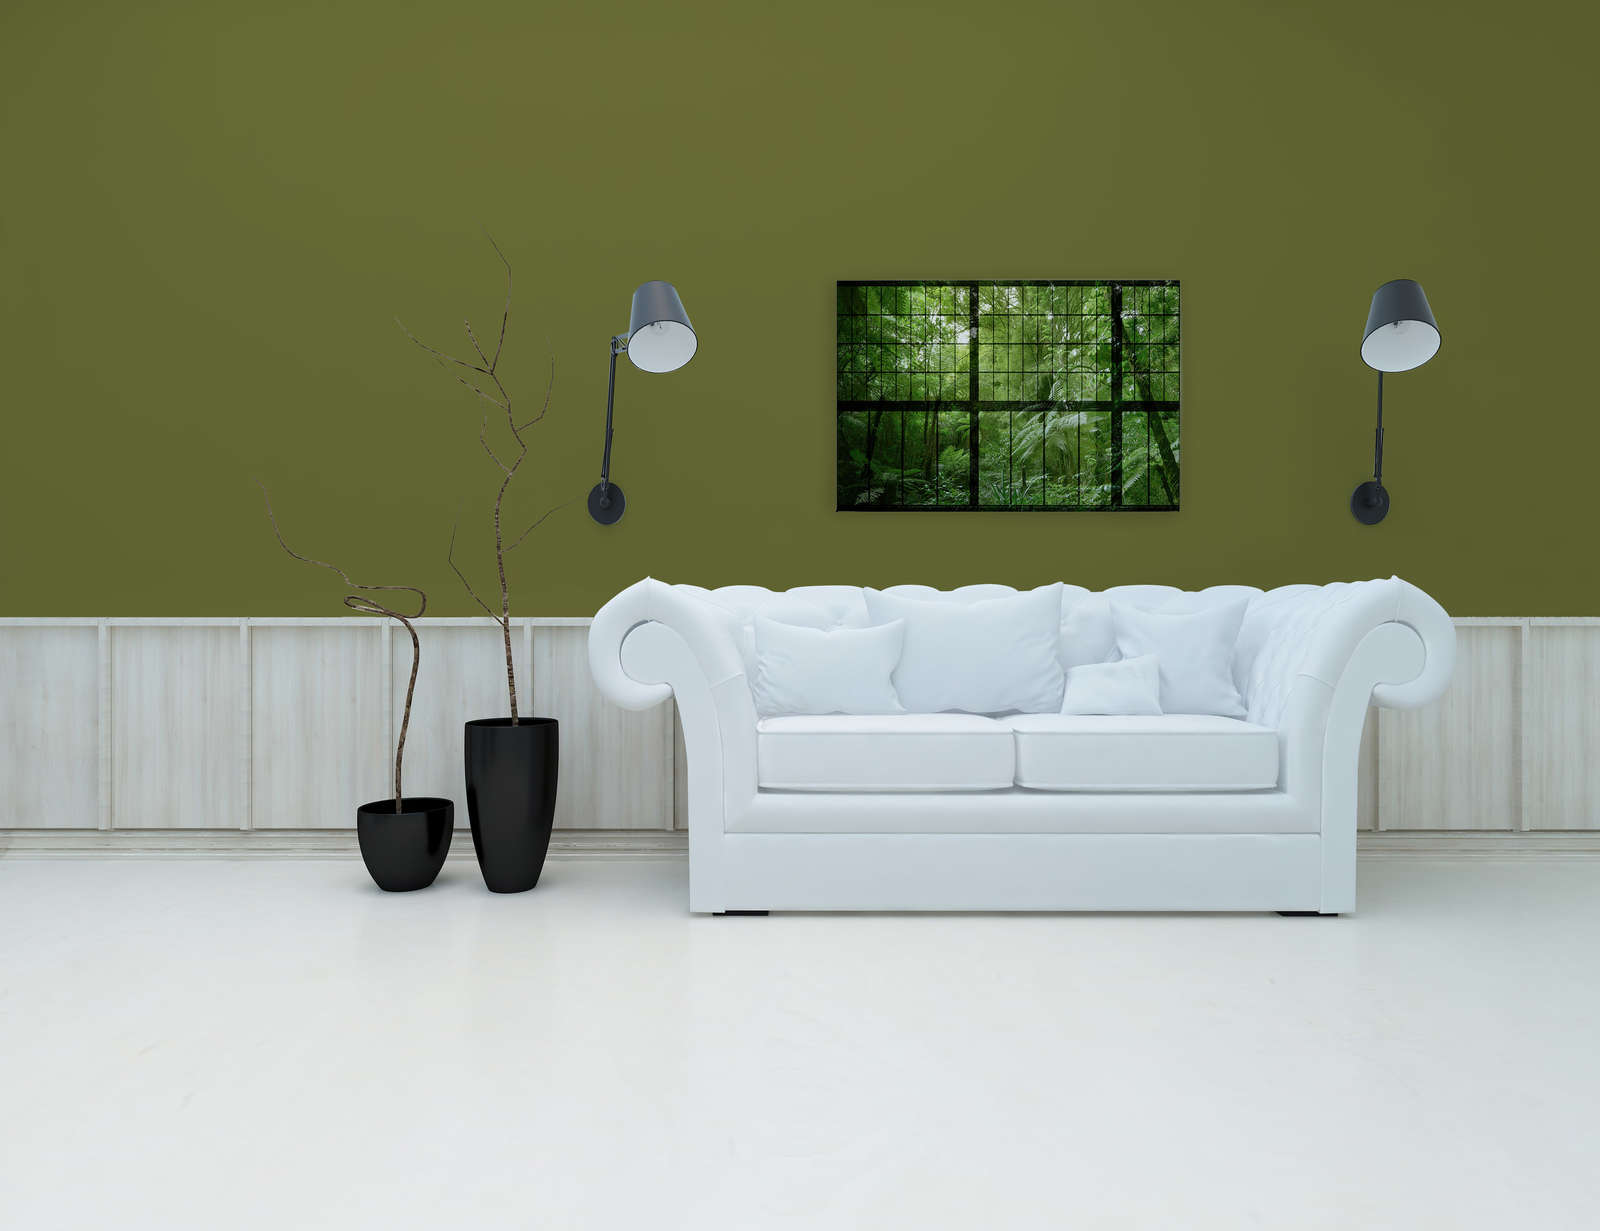             Rainforest 2 - Loft window canvas painting with jungle view - 0.90 m x 0.60 m
        